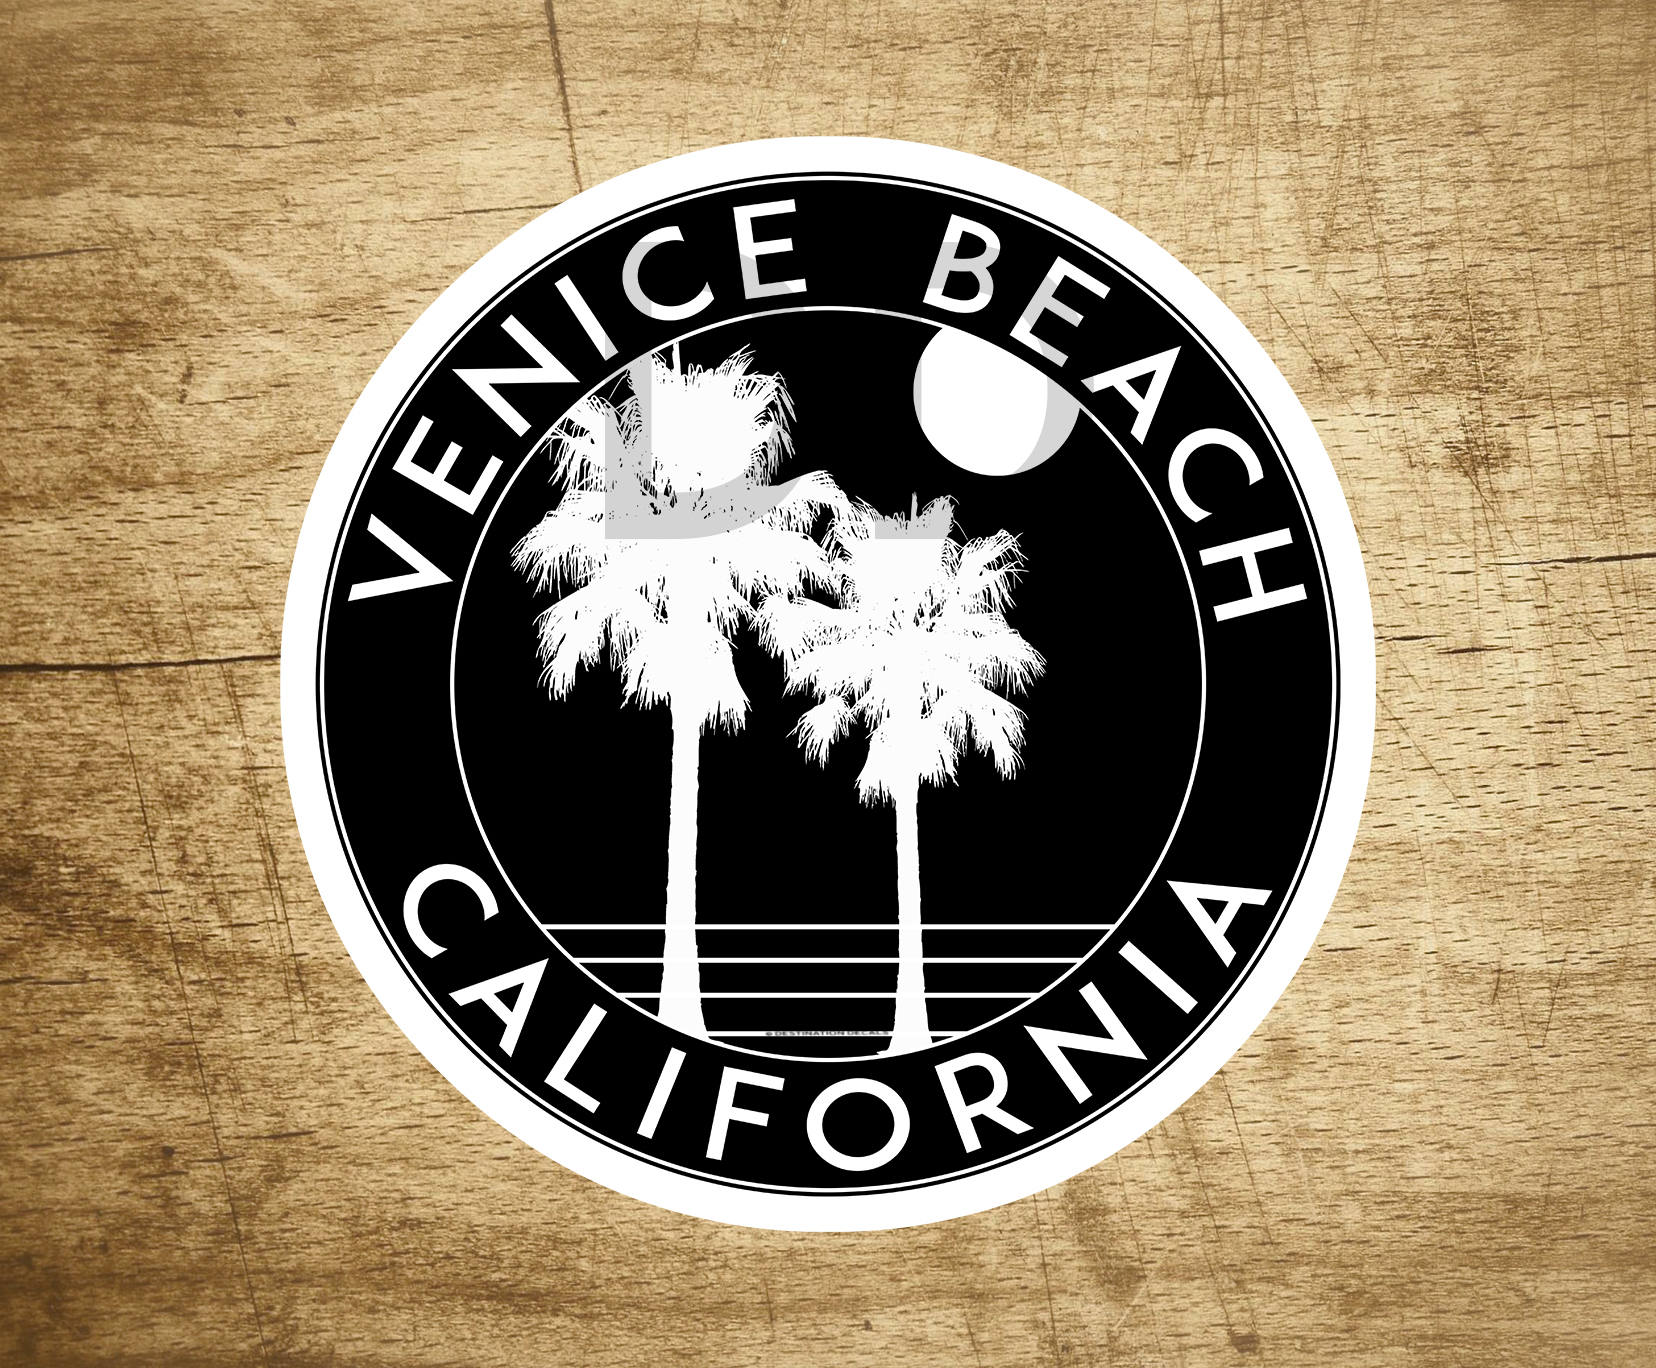 Venice Beach California Sticker Decal Beach Ocean Surfing Vinyl 3" x 3"